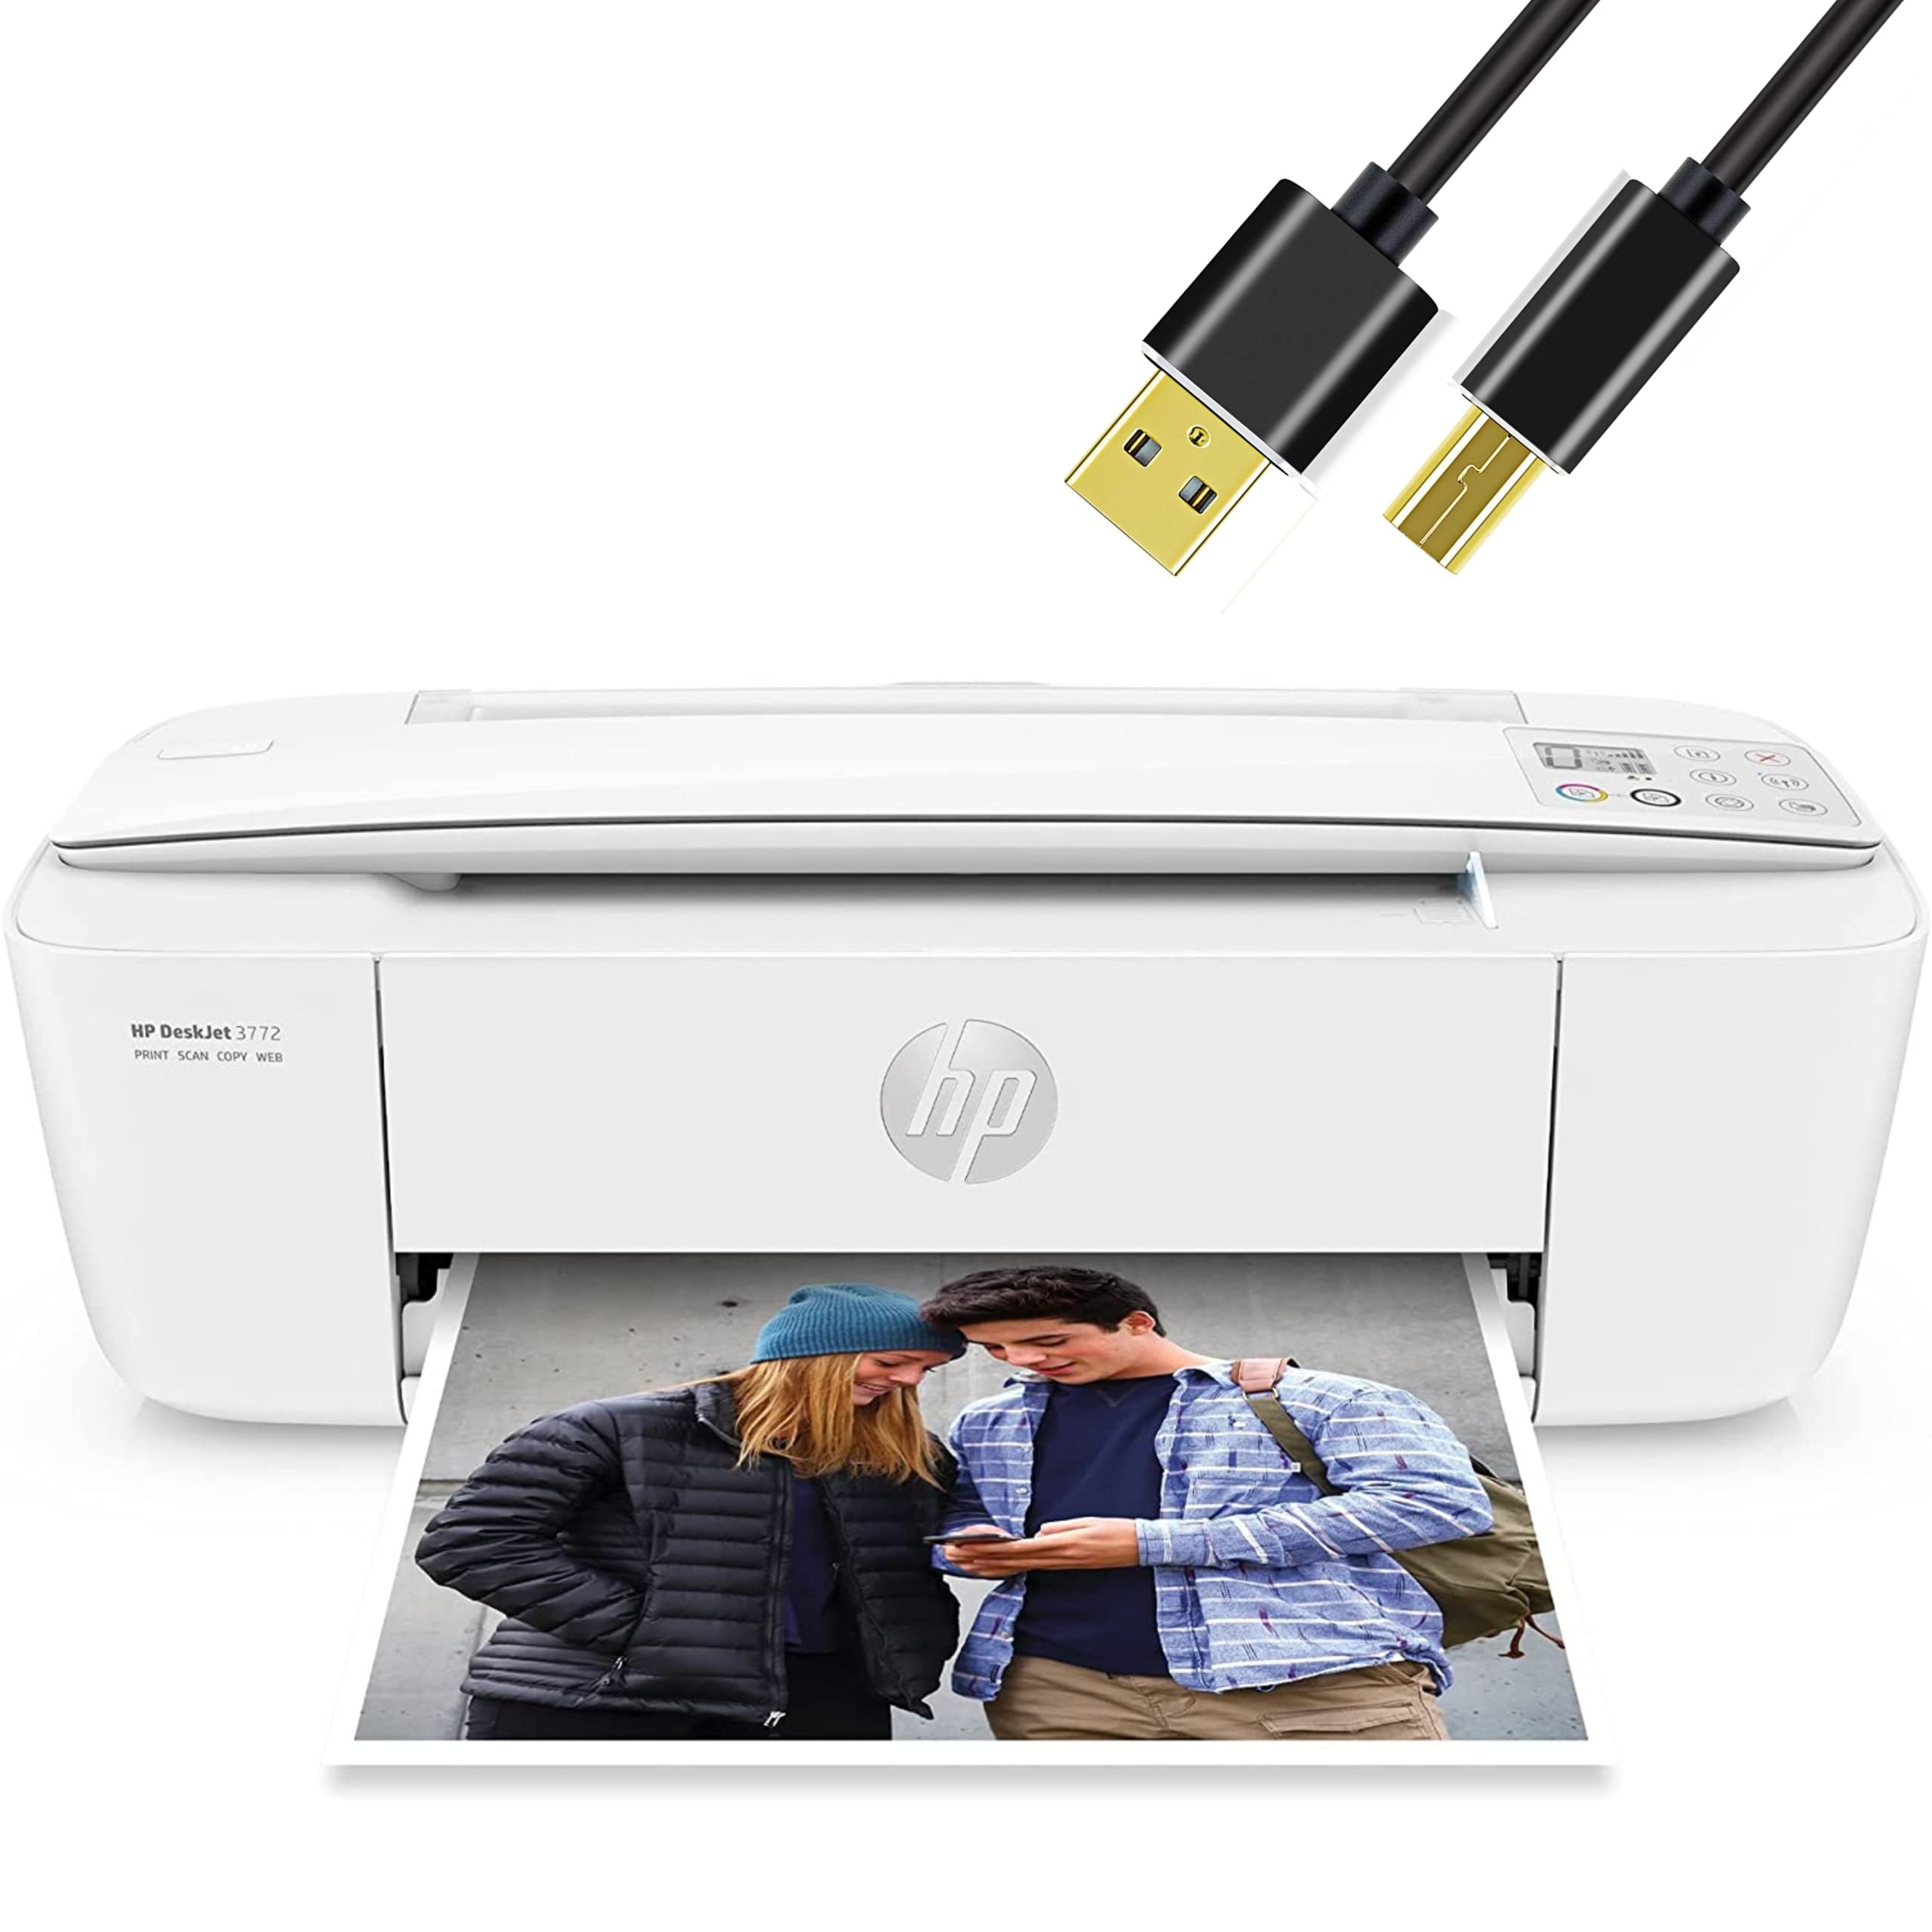 HP H -P DeskJet 无线彩色喷墨打印机一体机，带 LCD 显示屏 - 打印、扫描、复印和移动打印 ...